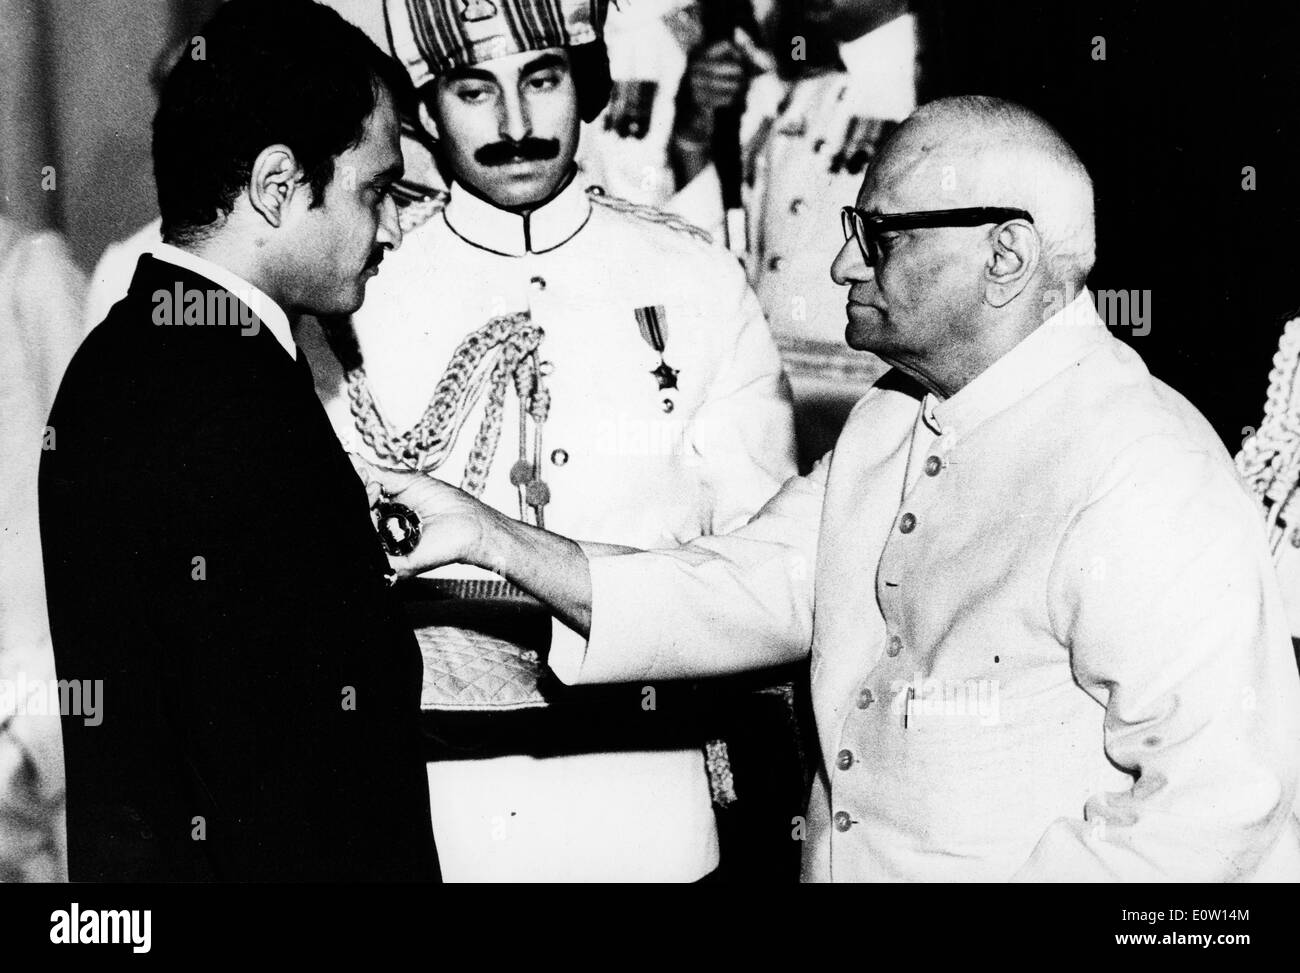 President V.V. Giri awarding a man during a ceremony Stock Photo